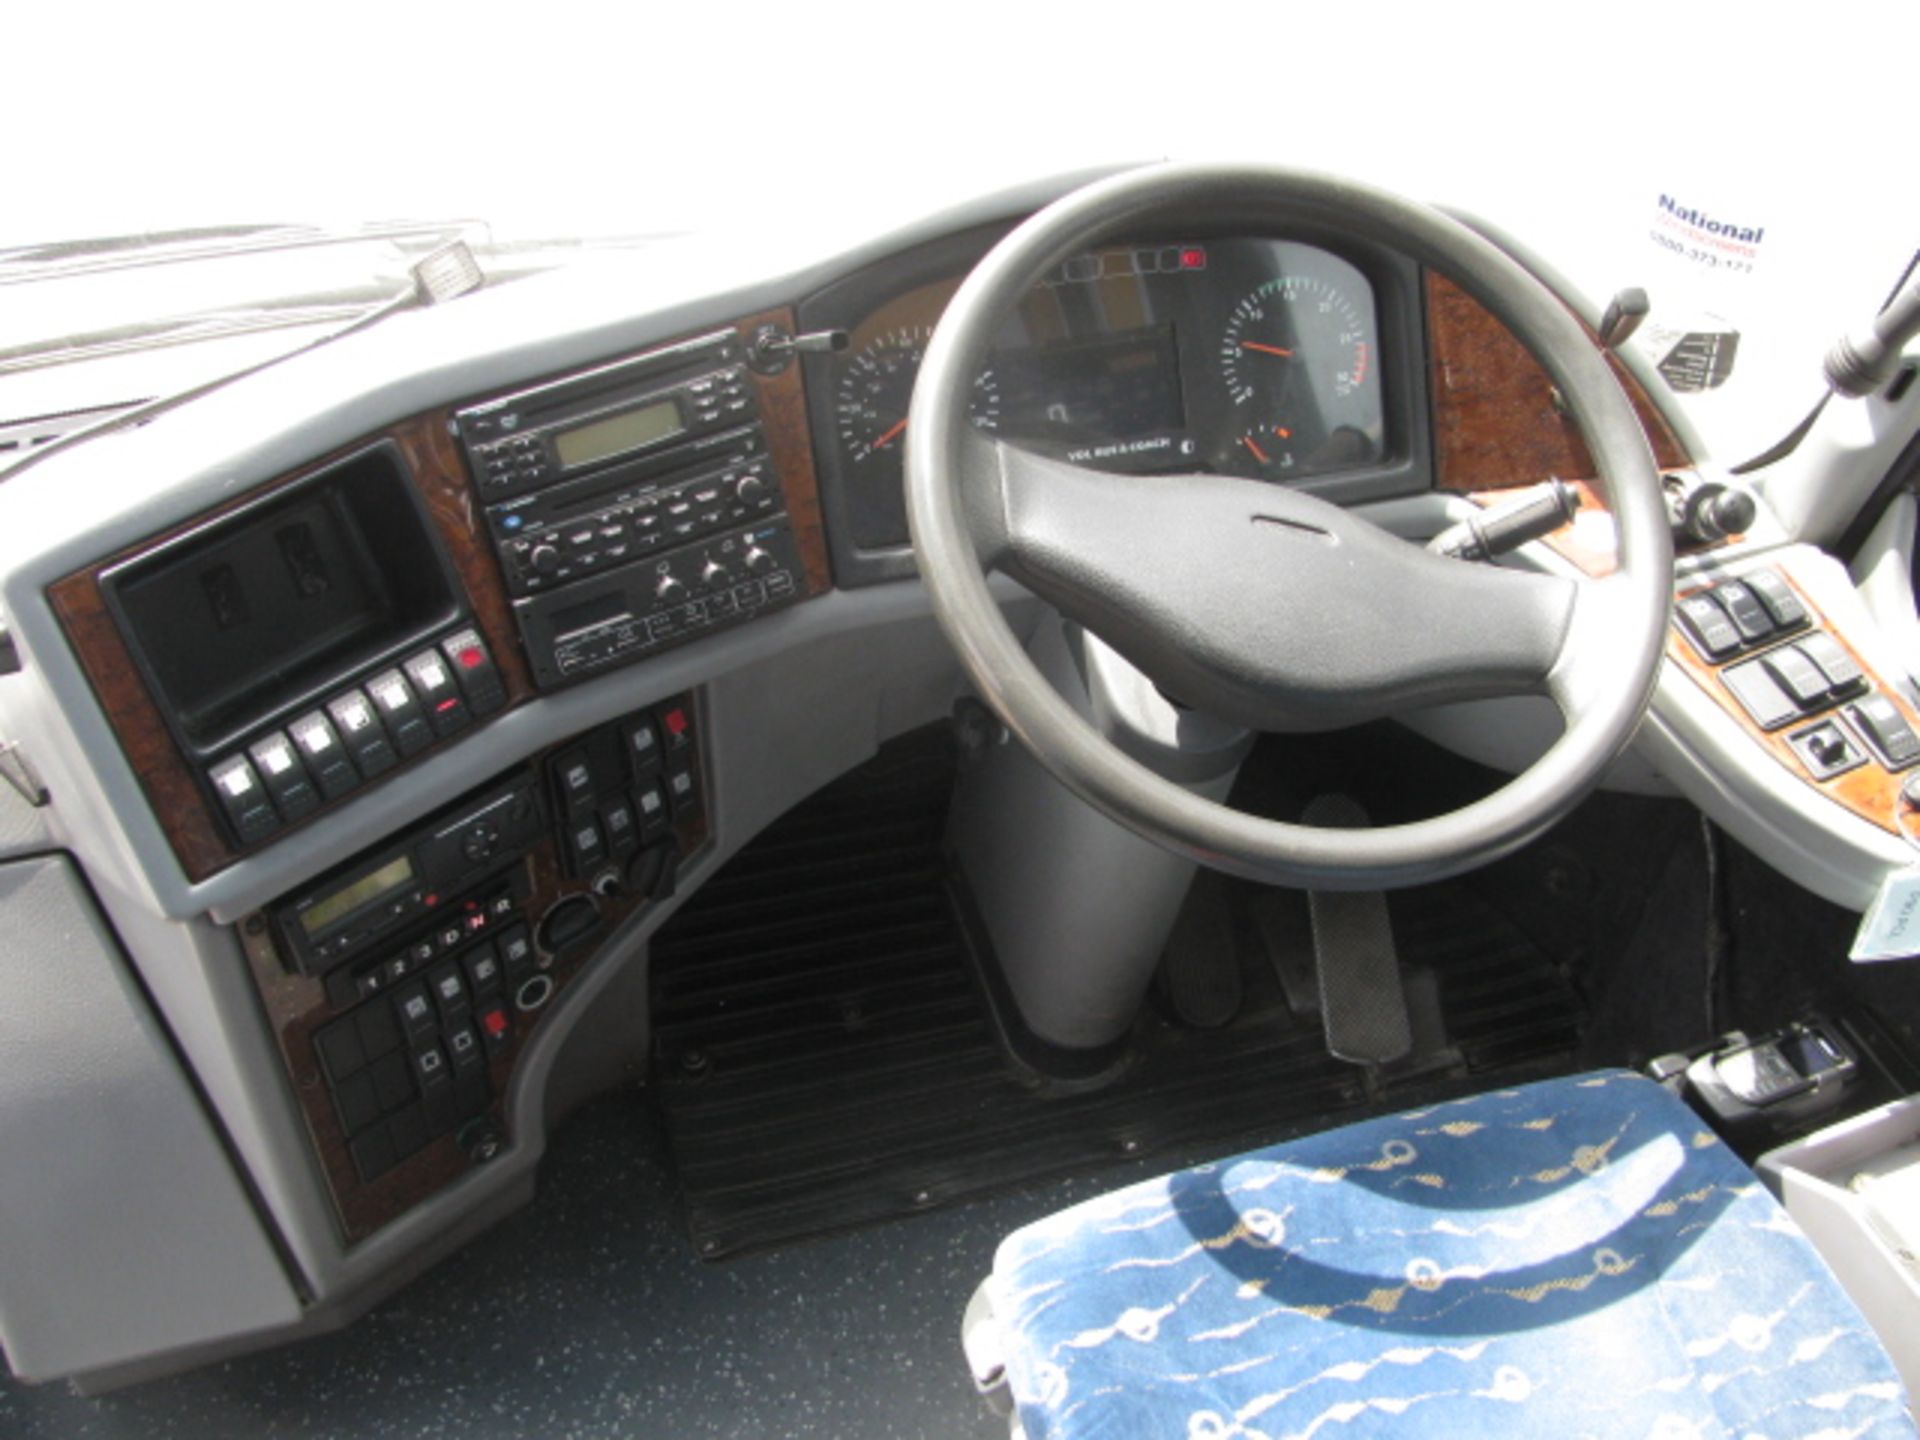 VDL Bova Futura FHD127.365 highline integral luxury coach - Image 7 of 15